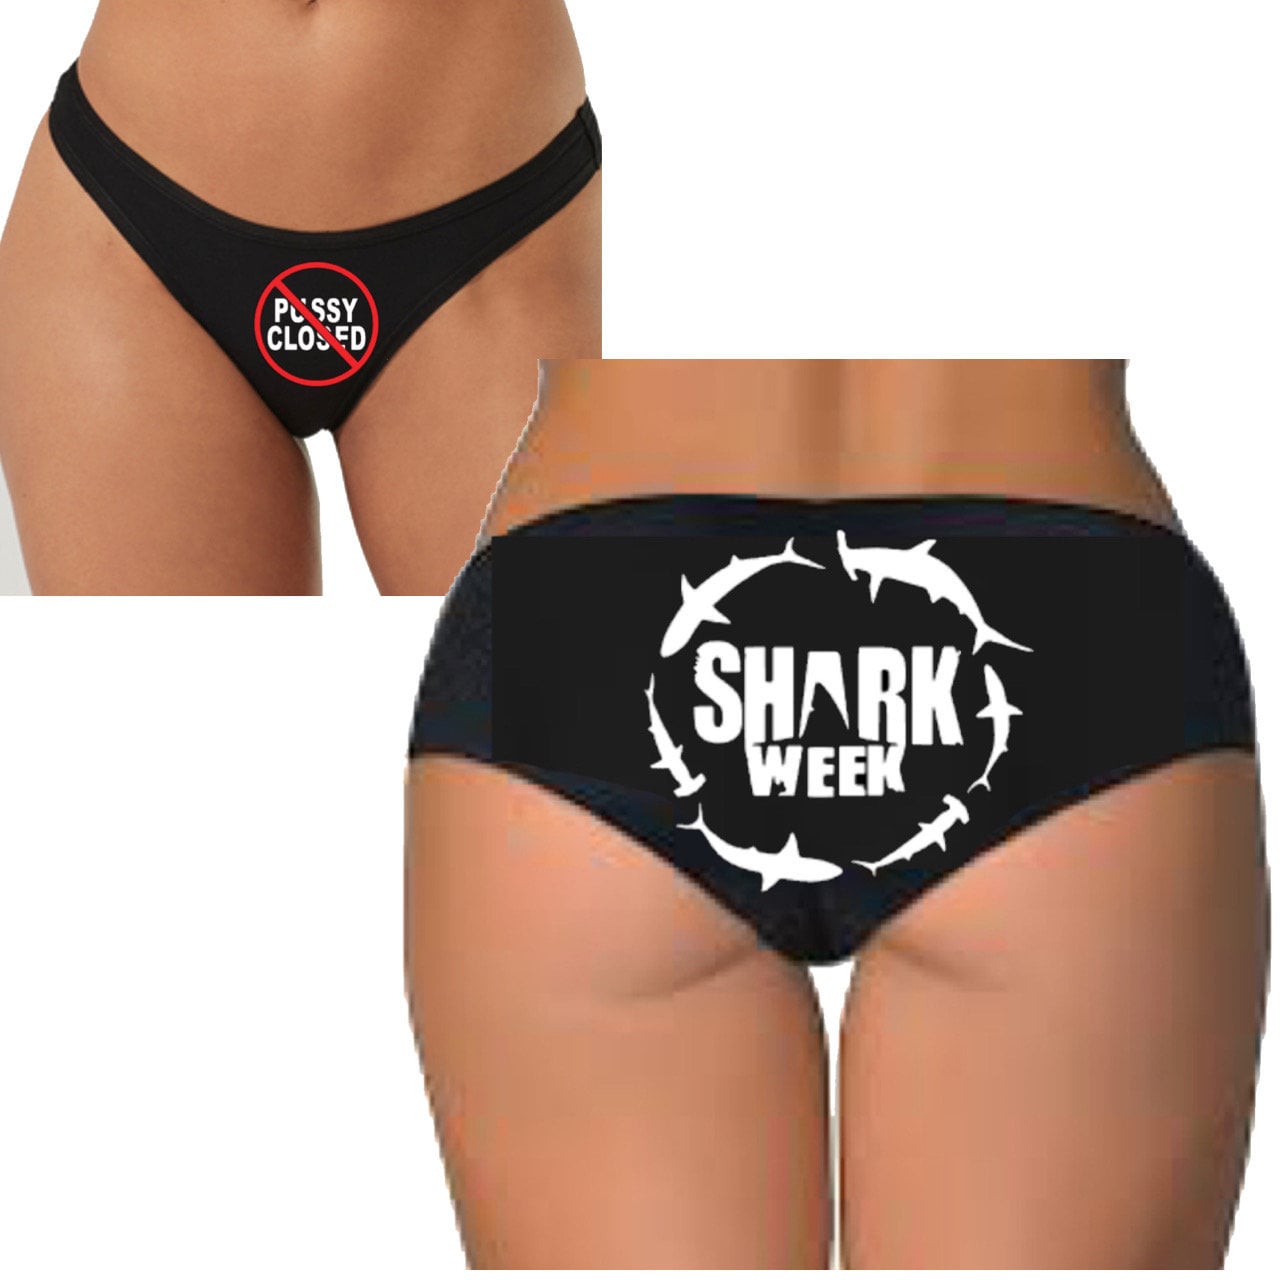 SJ San Jose Sharks Bachelorette Lingerie Gift or Boudoir Photo Shoot  Costume 34B Push up Bra, Medium Panties. 